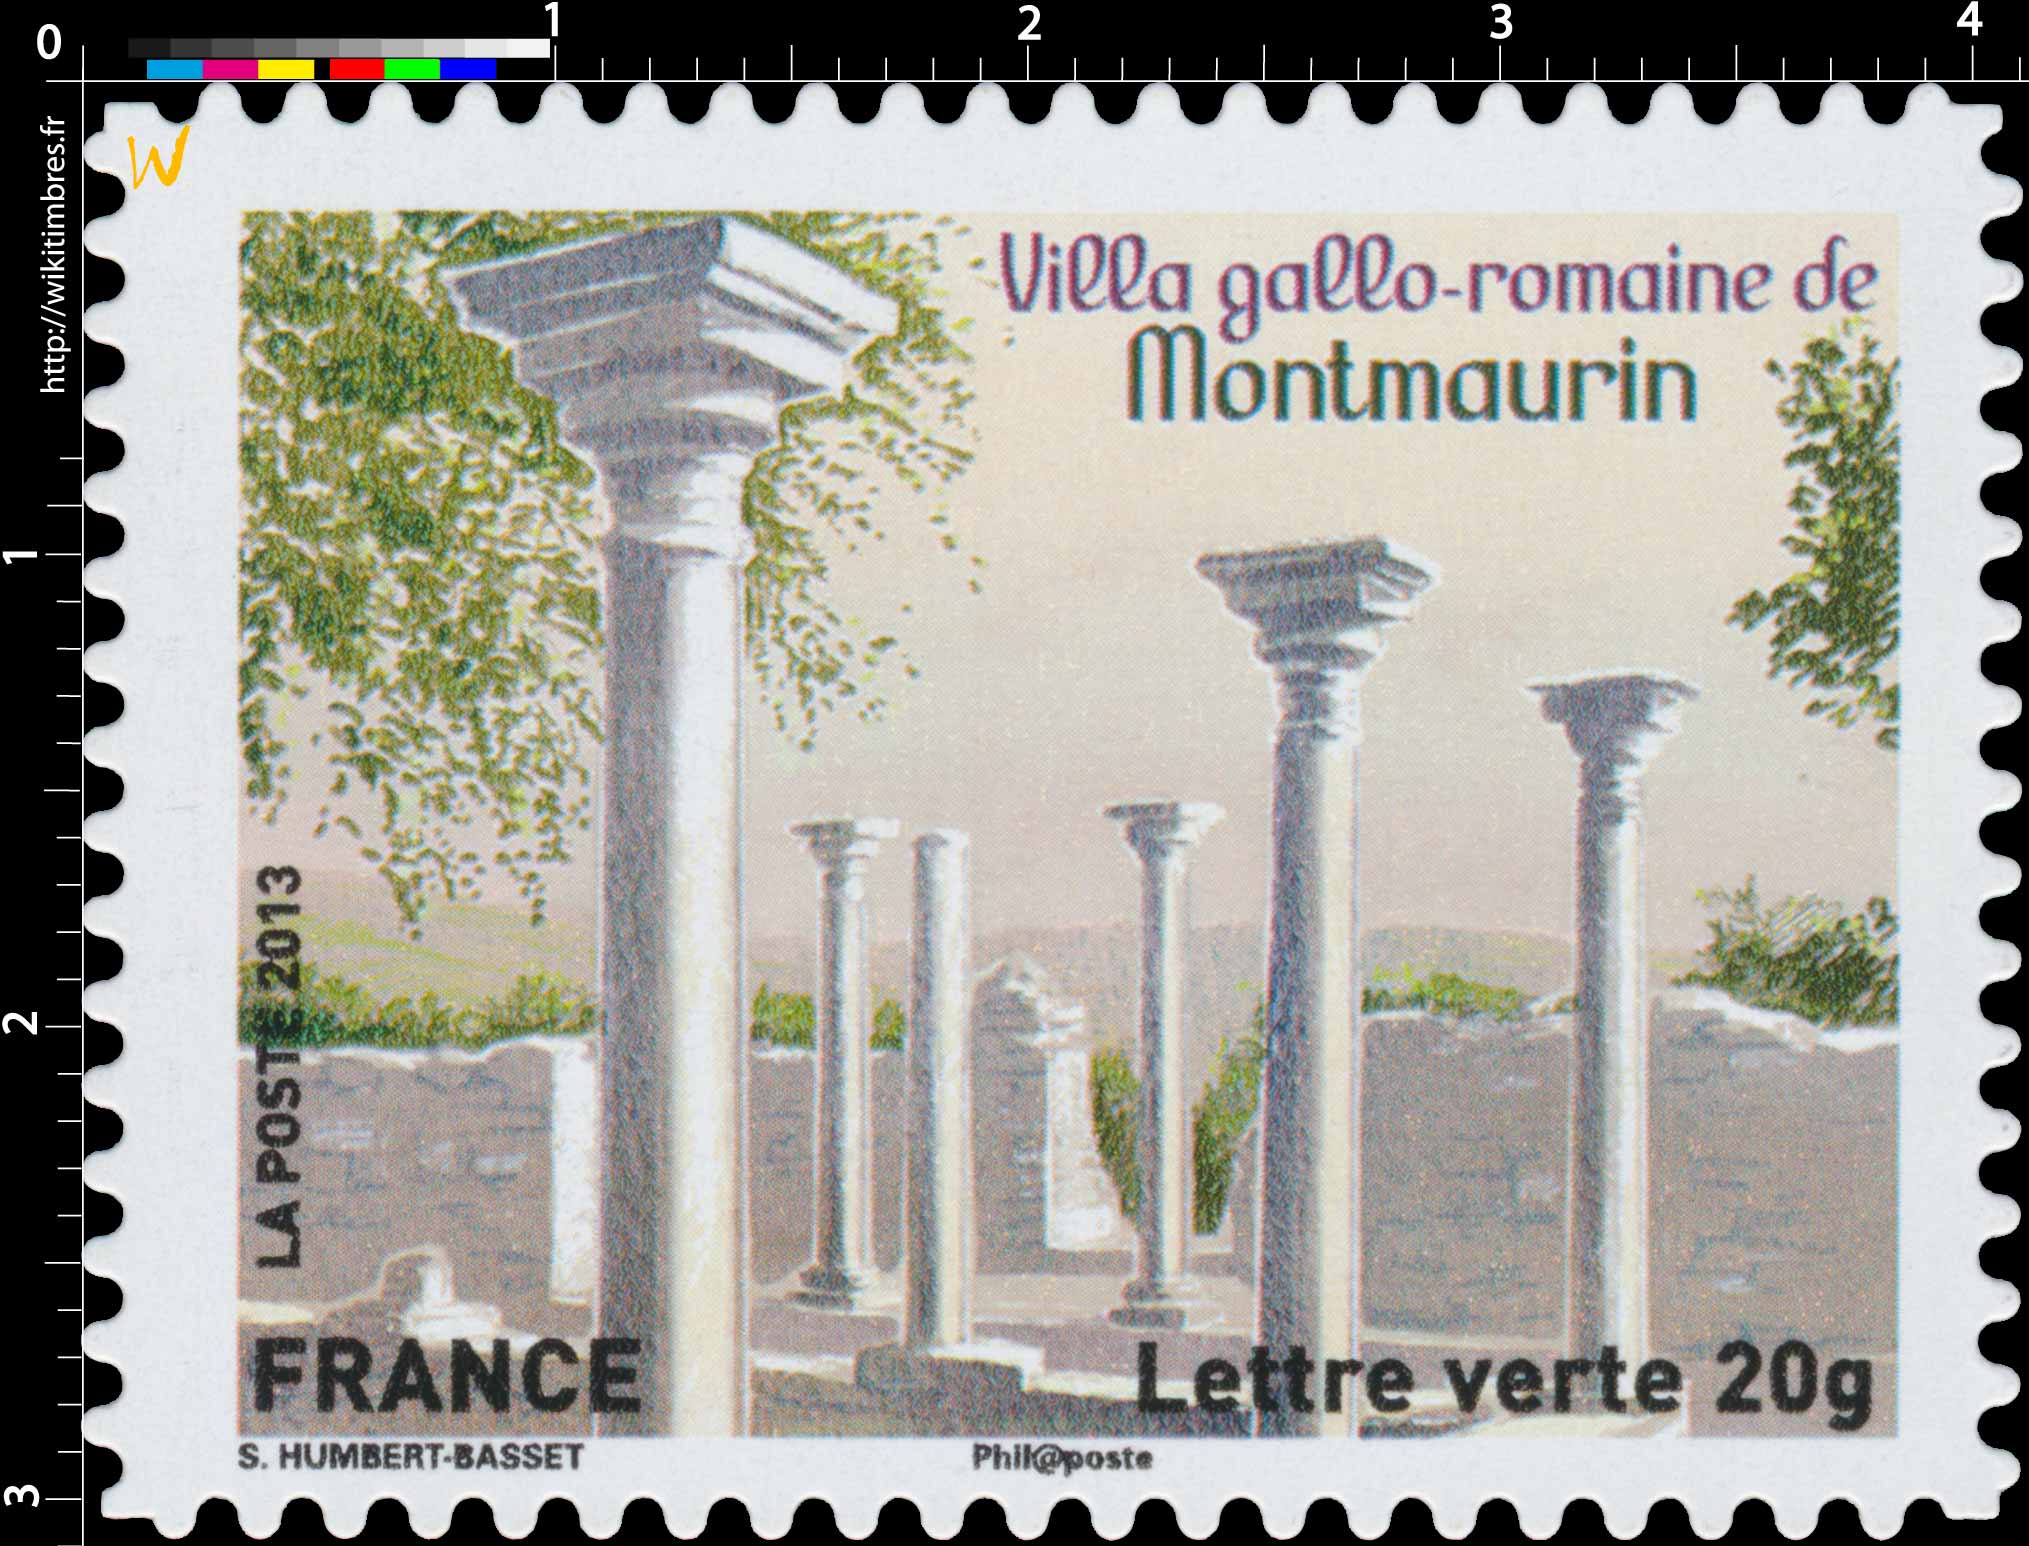 2013 Villa gallo-romaine de Montmaurin